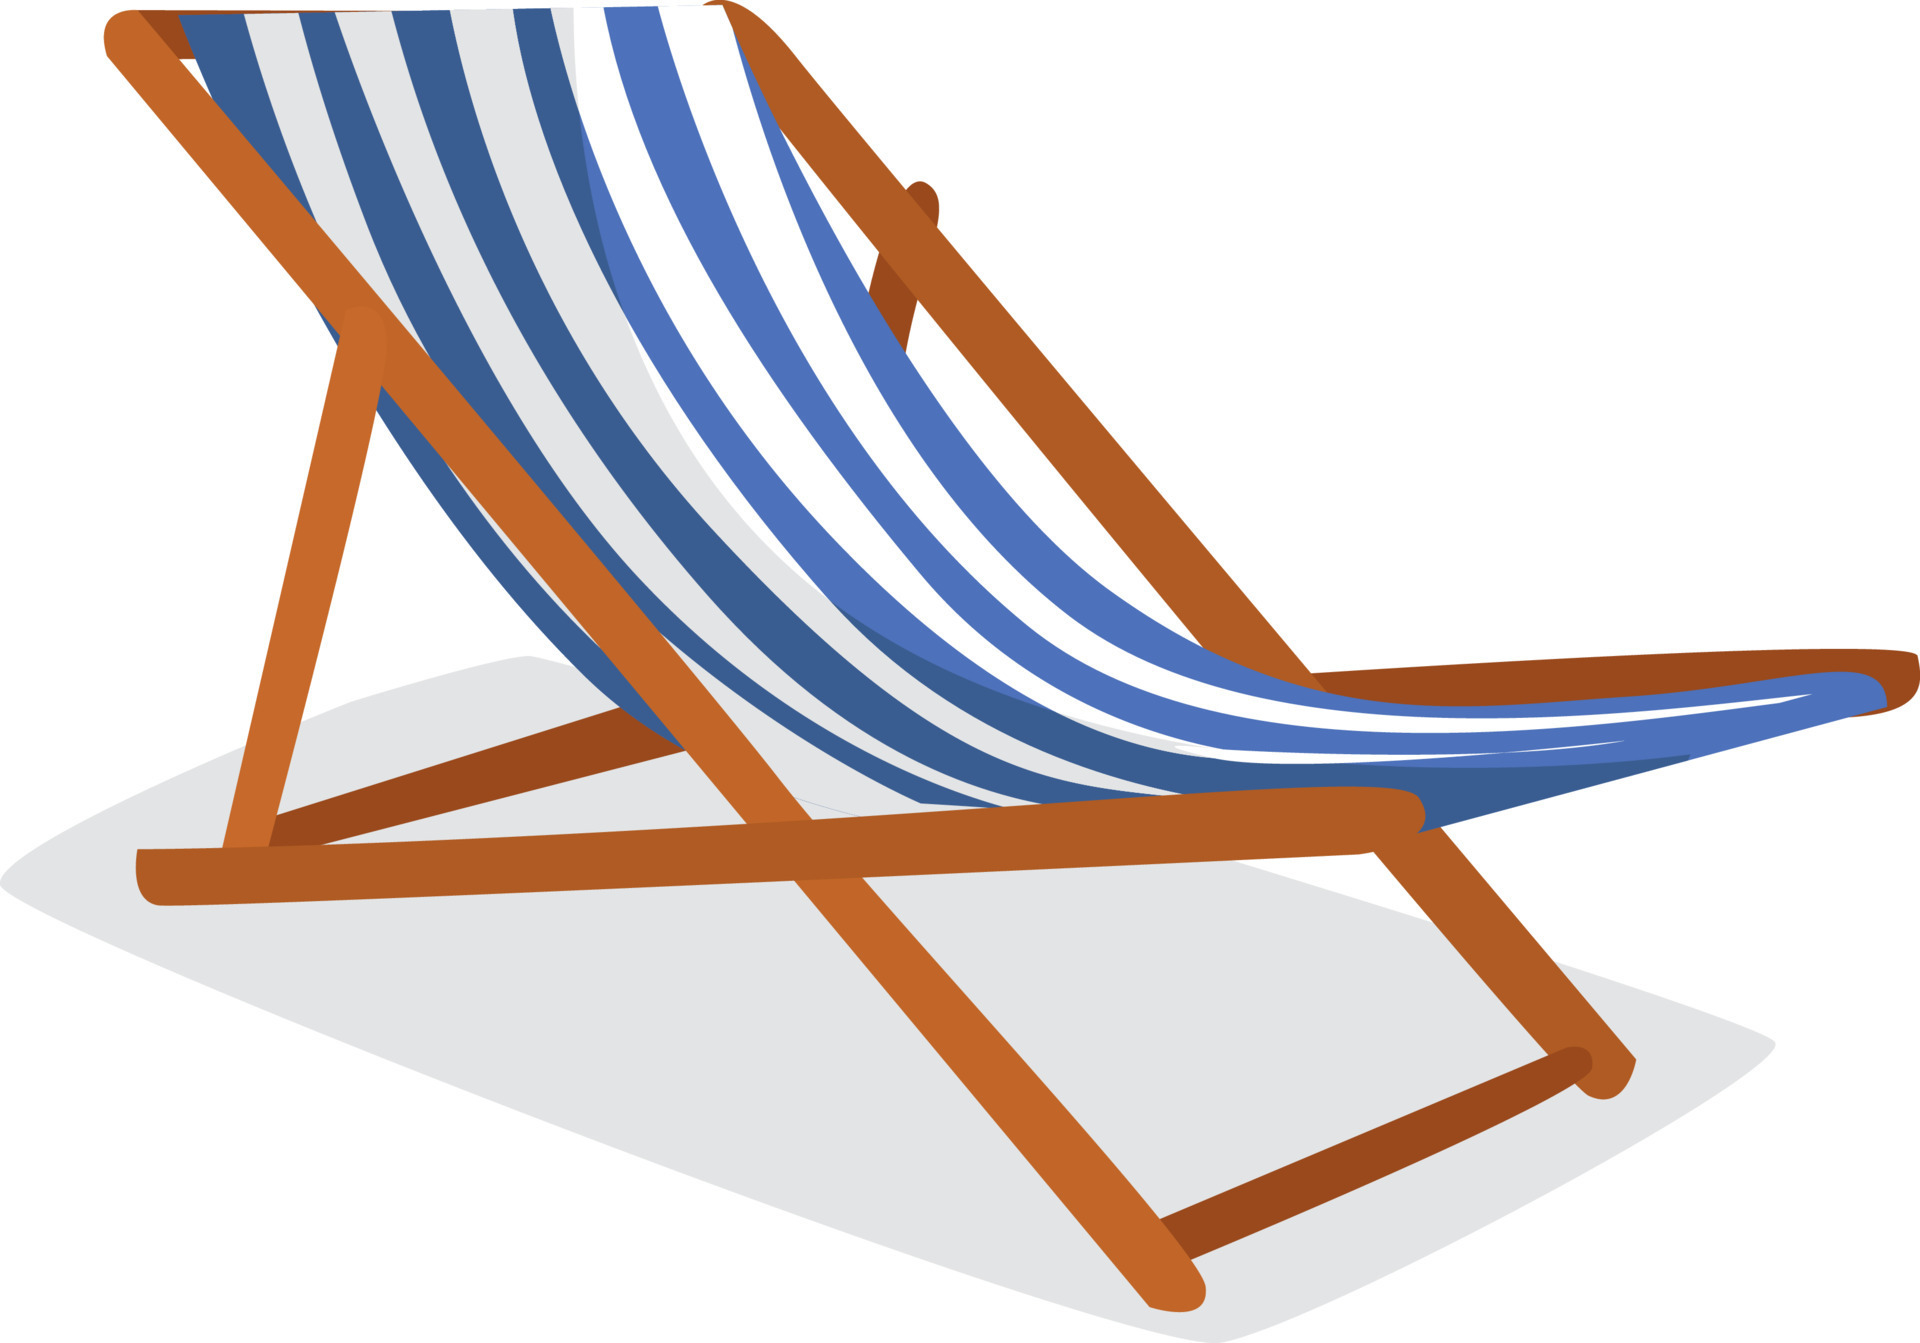 Sunbed on beach, illustration, vector on white background 13575243 ...